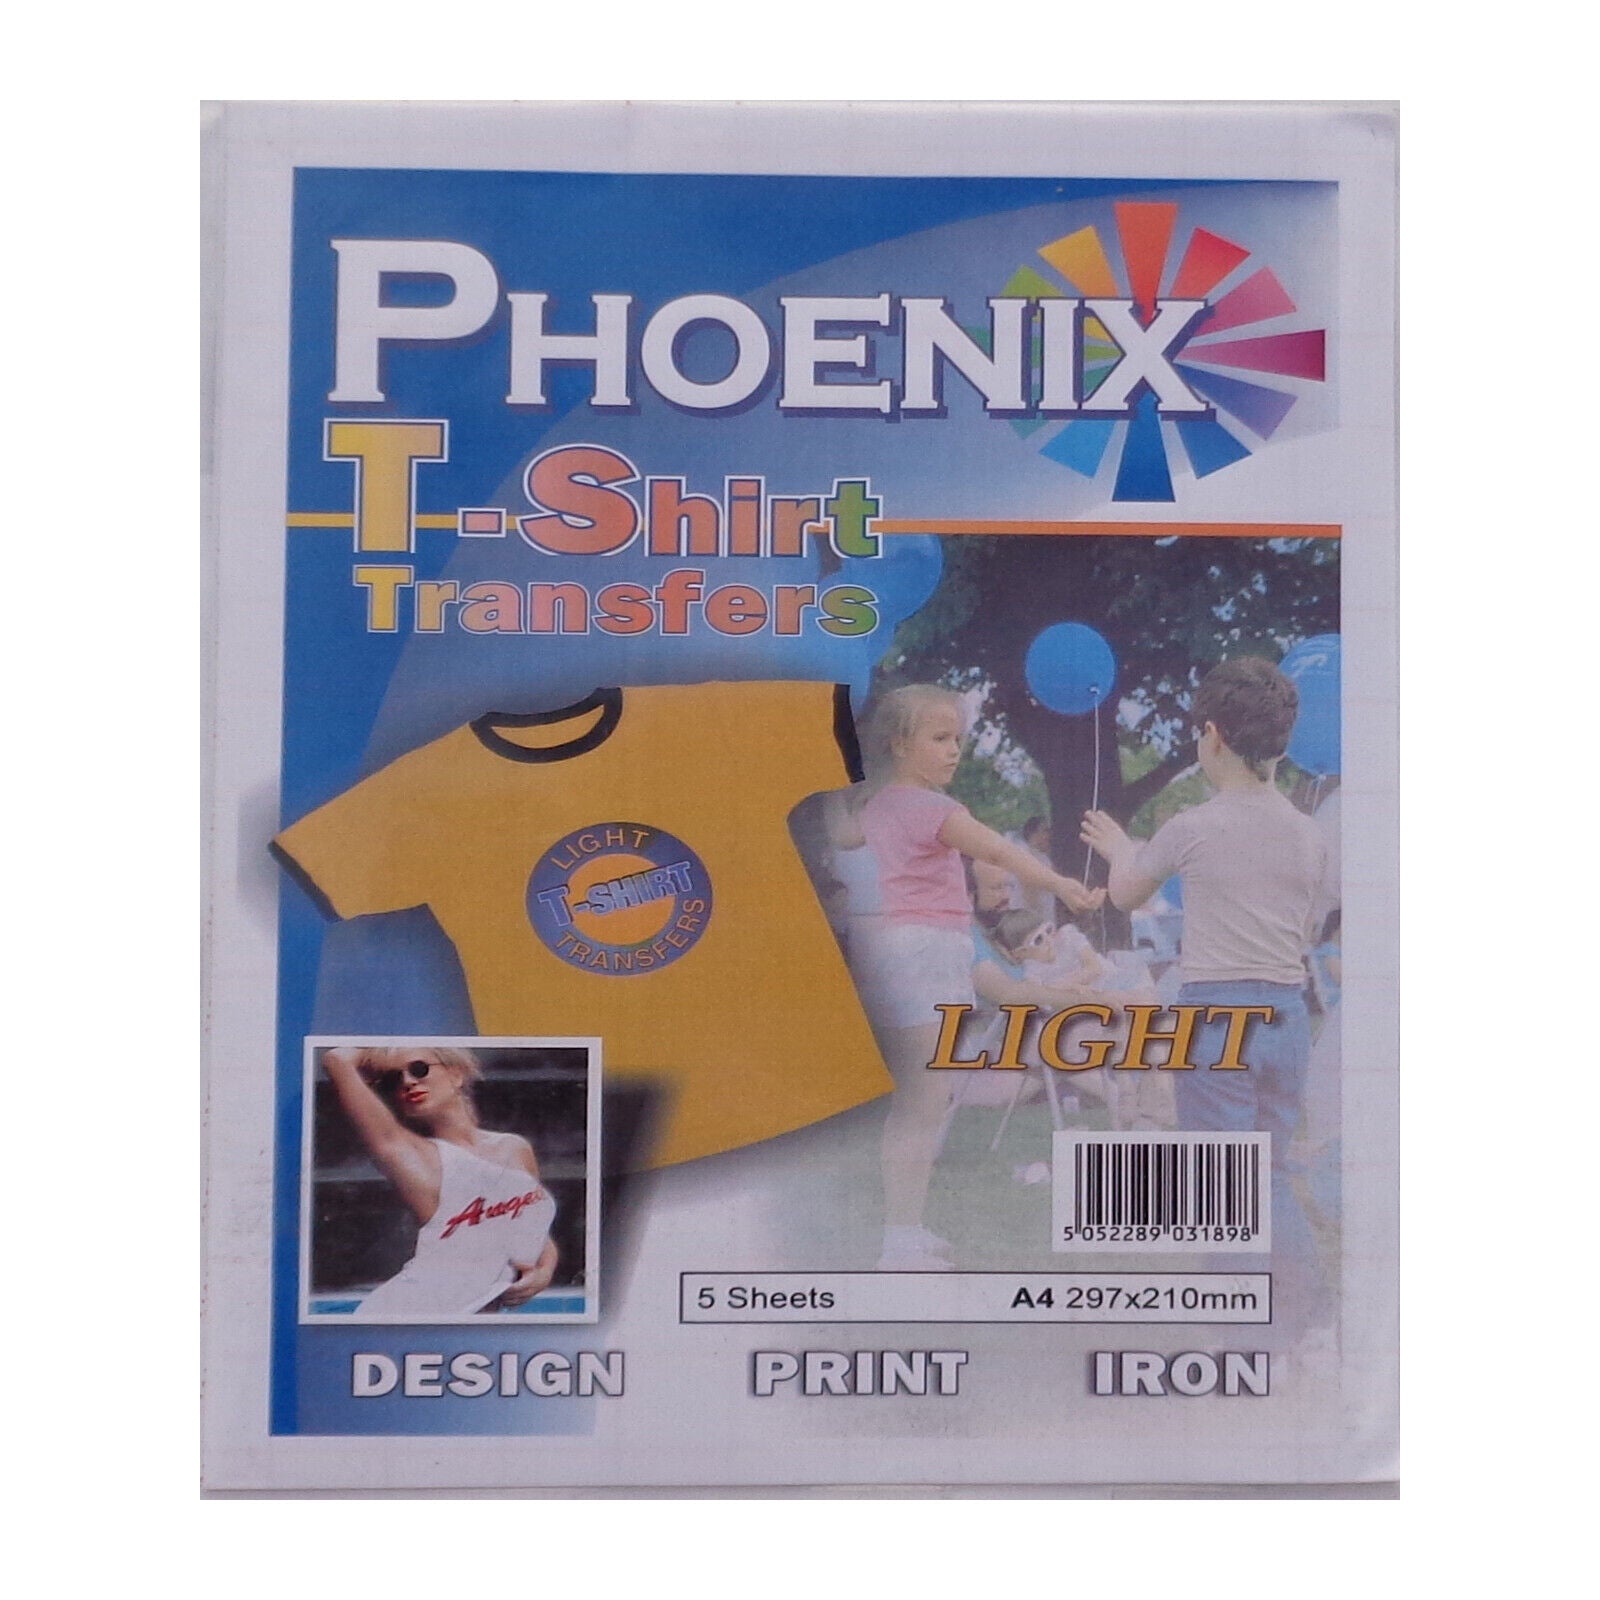 Phoenix T-Shirt Transfer Paper A4 - Light 5 Sheets